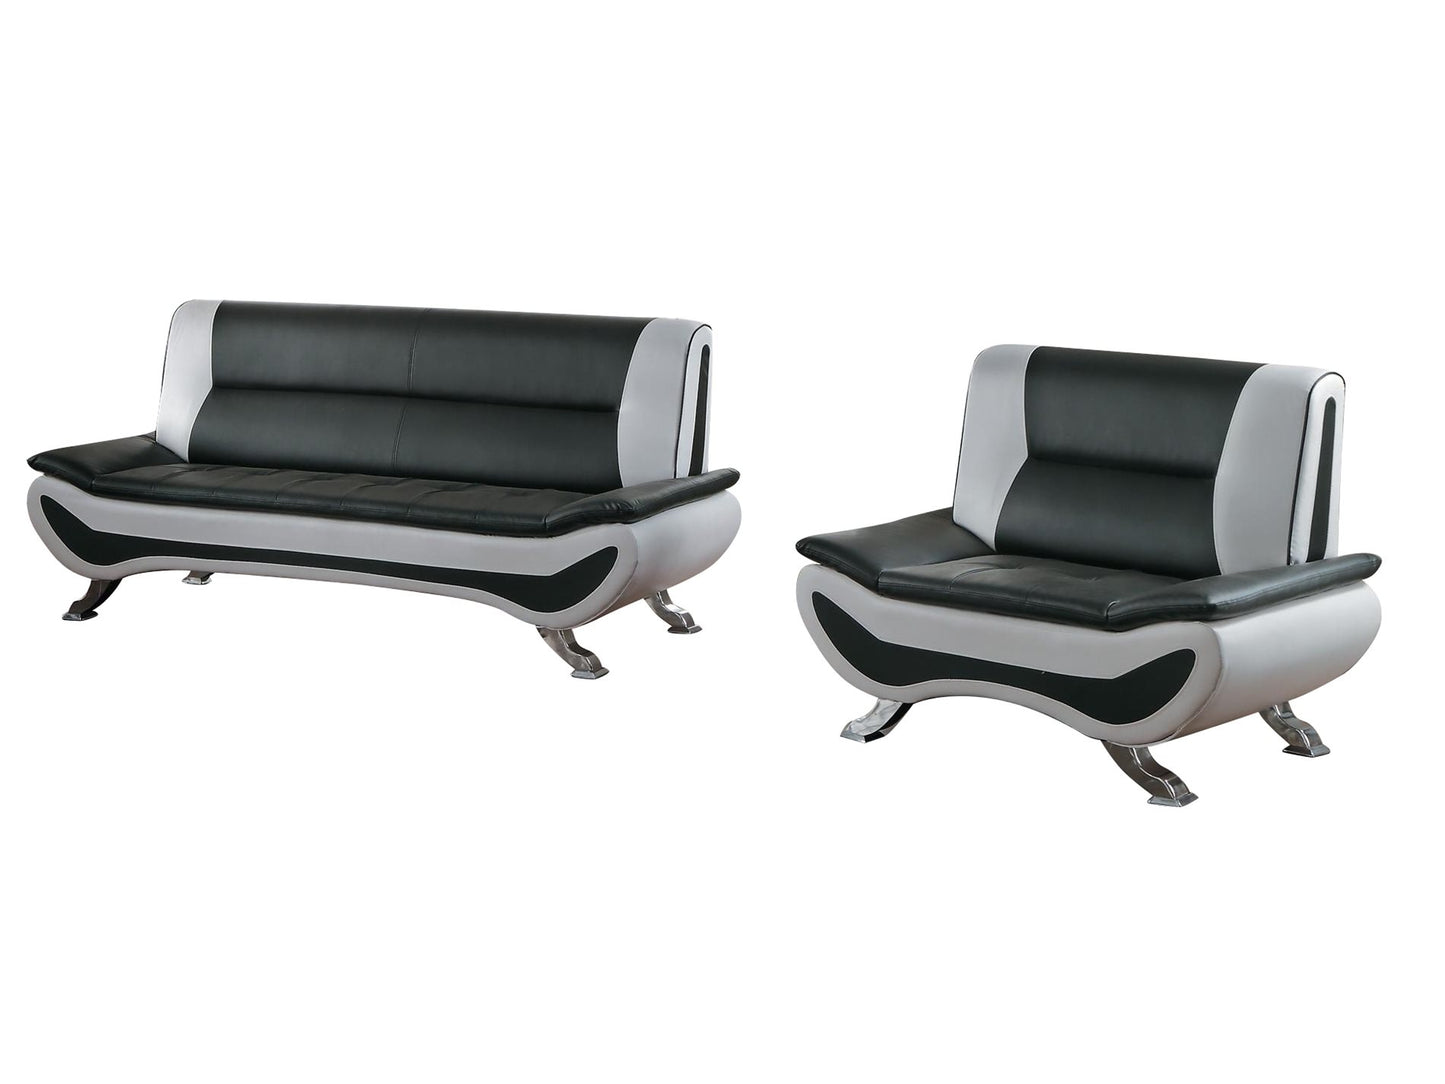 Homelegance Veloce Park 2PC Sofa & Chair in Black & White Leather